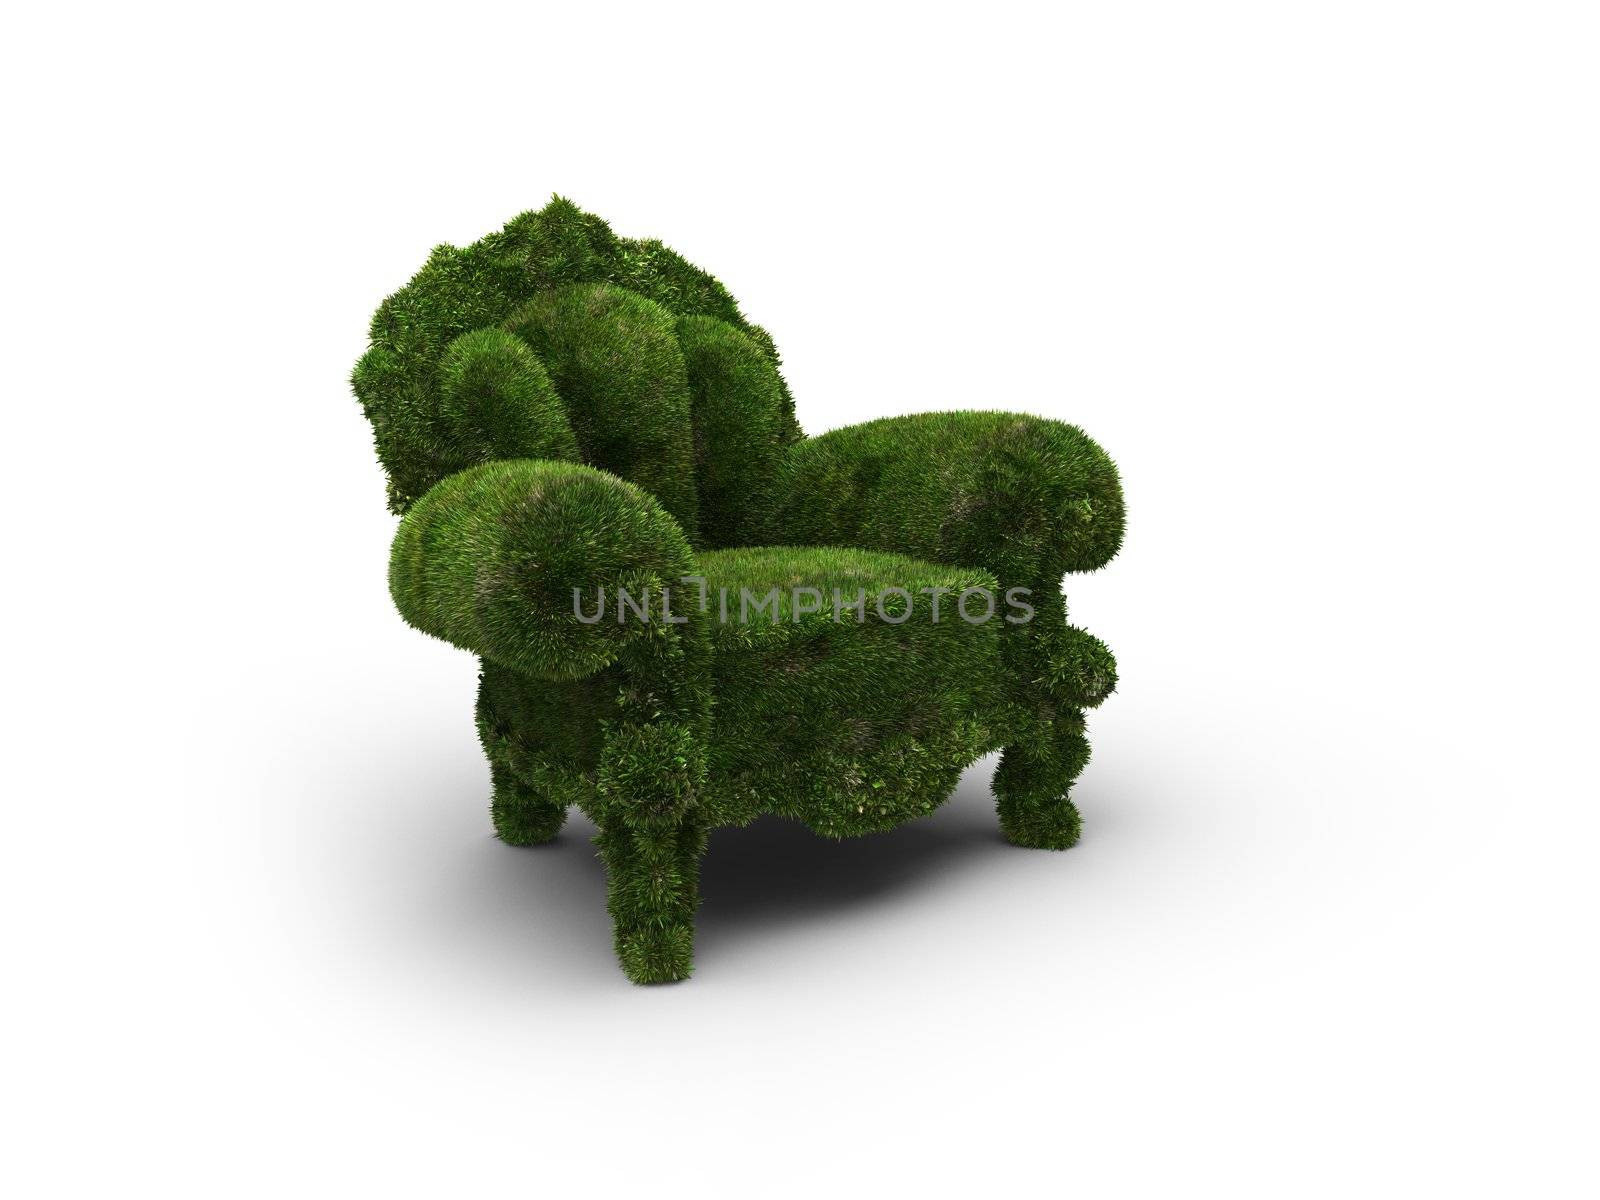 chair designed as an herbal